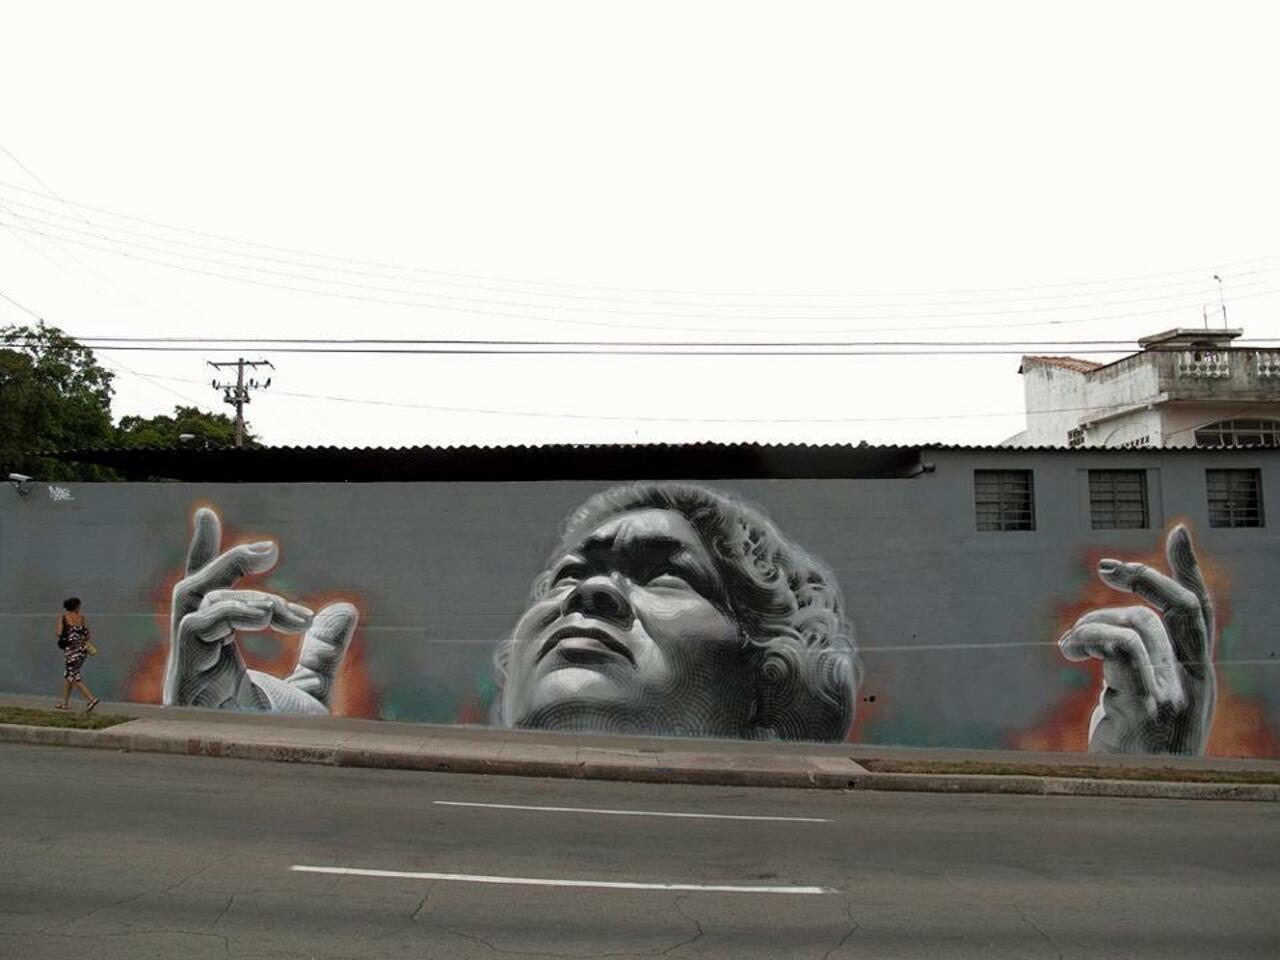 "@designopinion: Artist 'El Mac' new Street Art mural located in Havana, Cuba #art #mural #graffiti #streetart http://t.co/veJAQyDGWu"